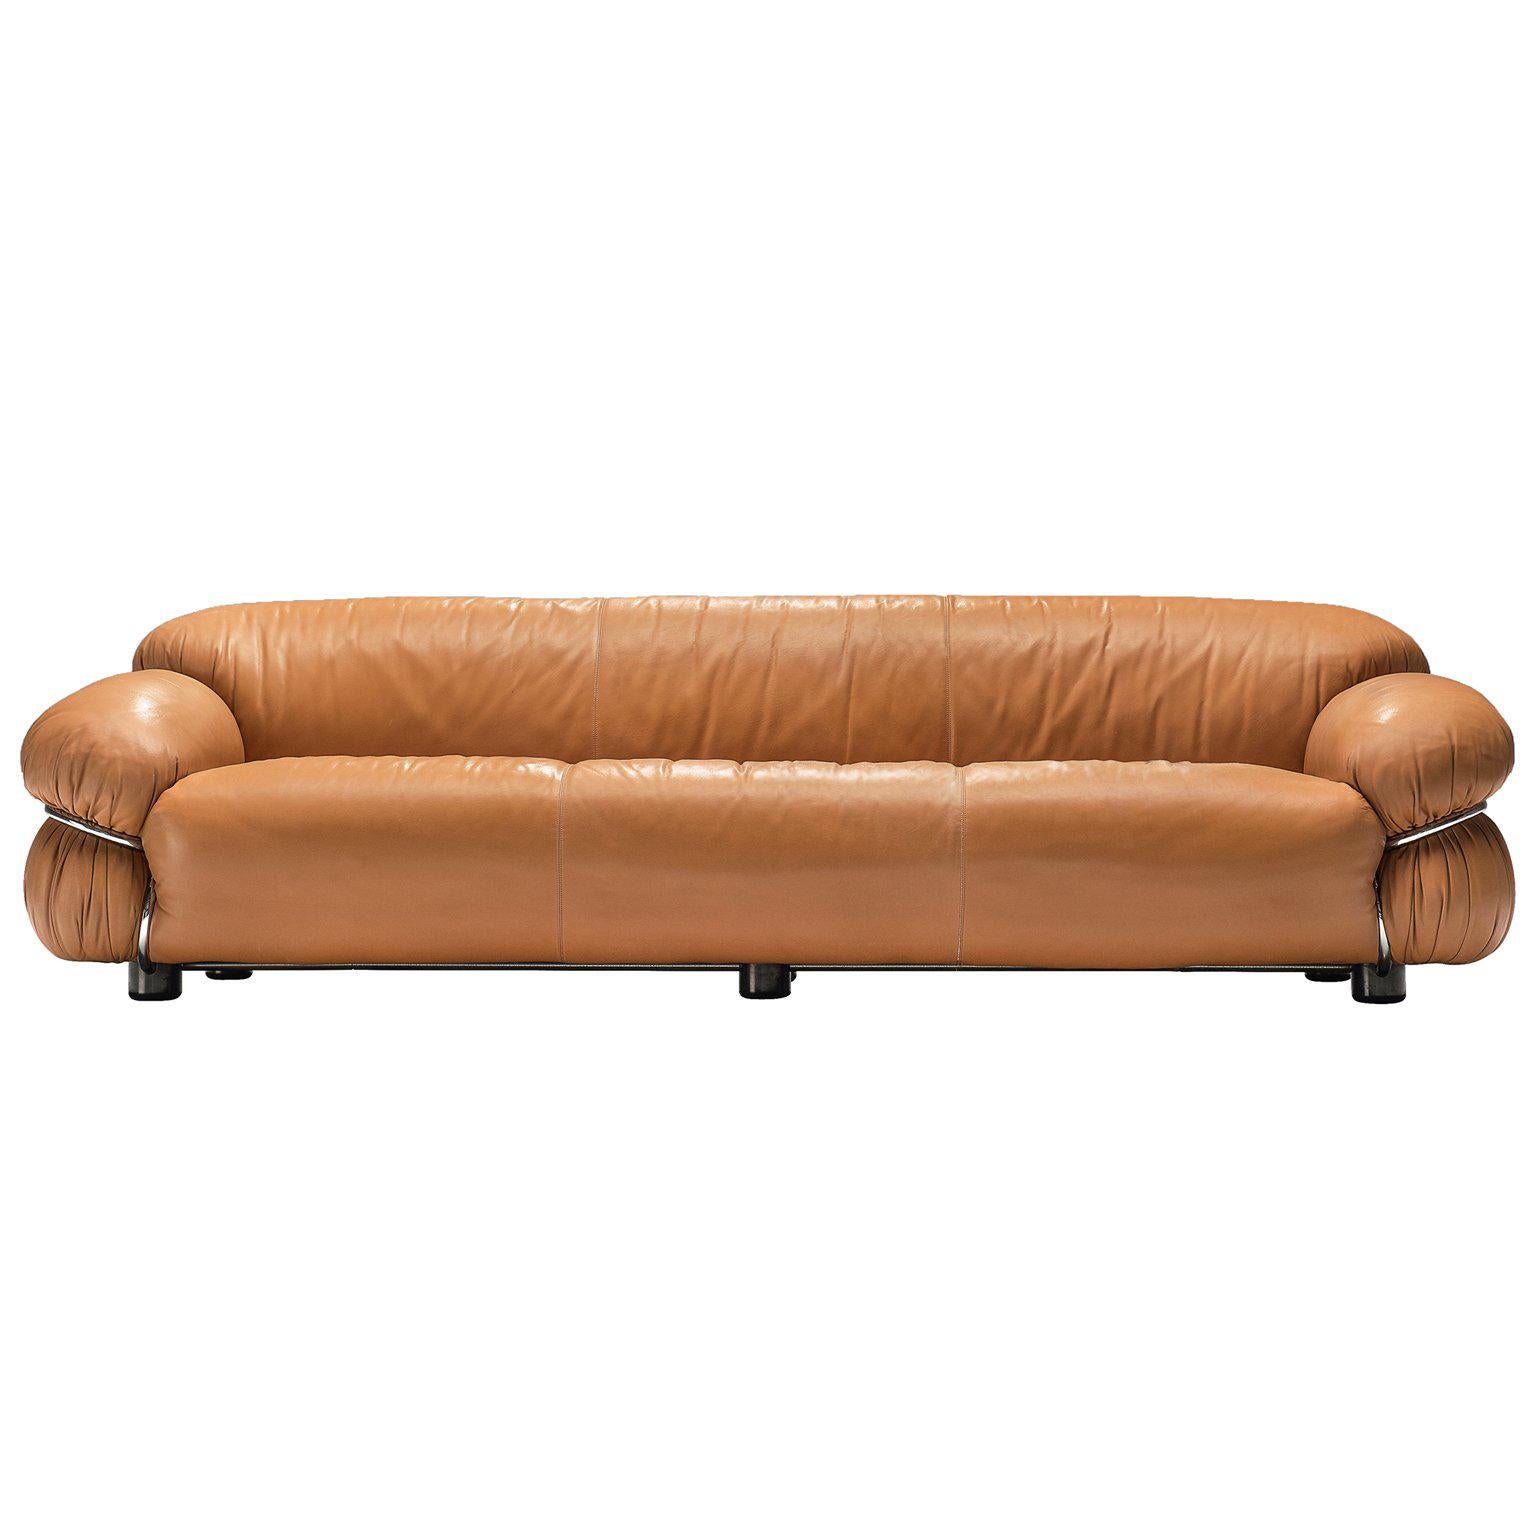 Gianfranco Frattini 'Sesann' Sofa in Original Cognac Leather